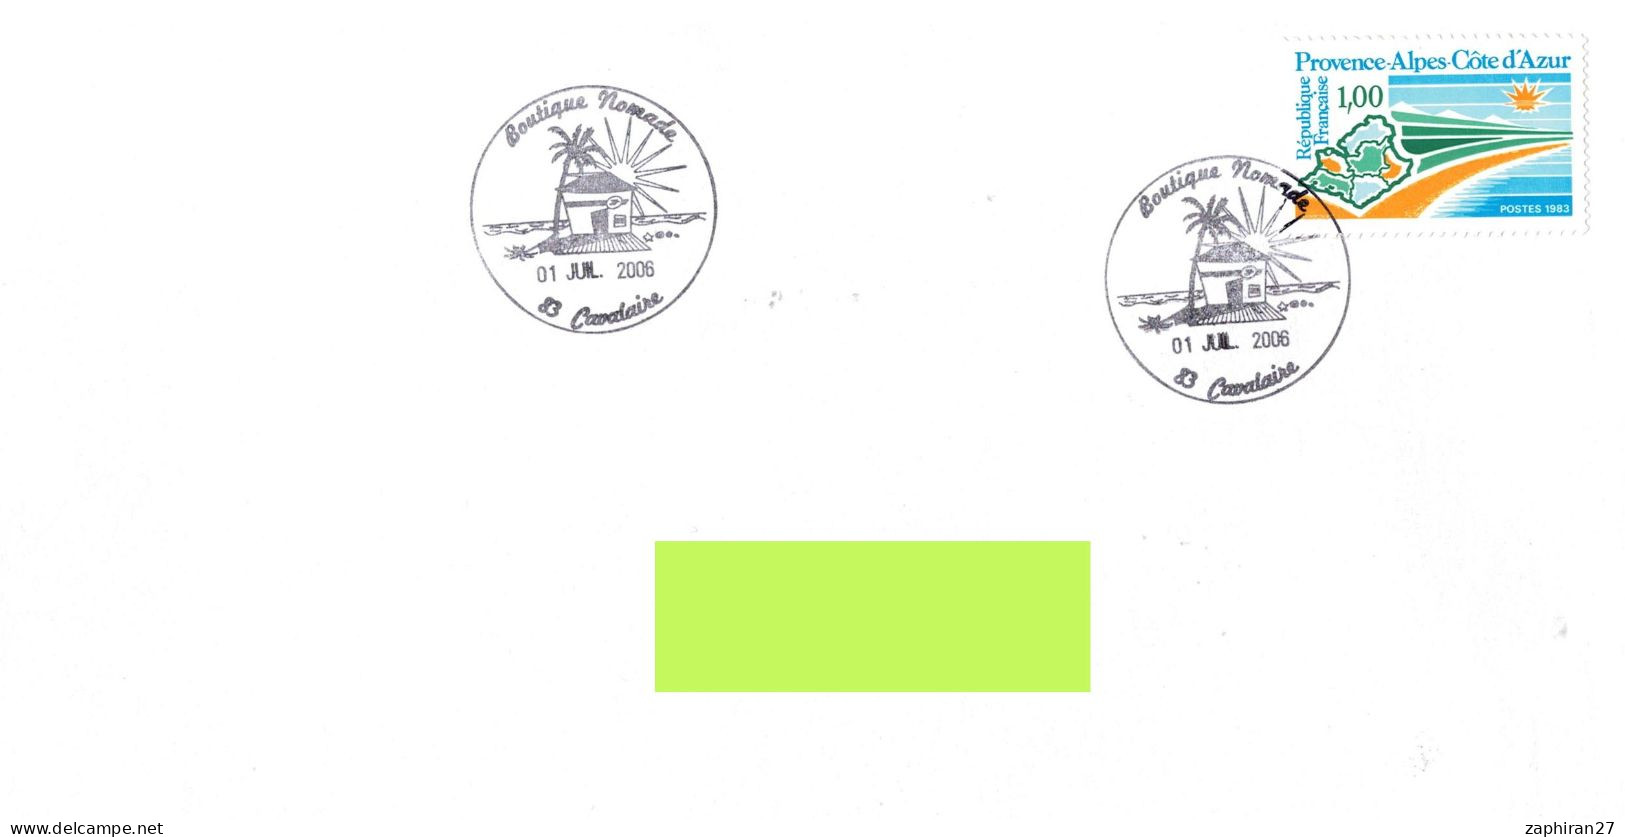 83 CACHET MANUEL CAVALAIRE (VAR) BOUTIQUE NOMADE (1-7-2206)  #950# - Manual Postmarks